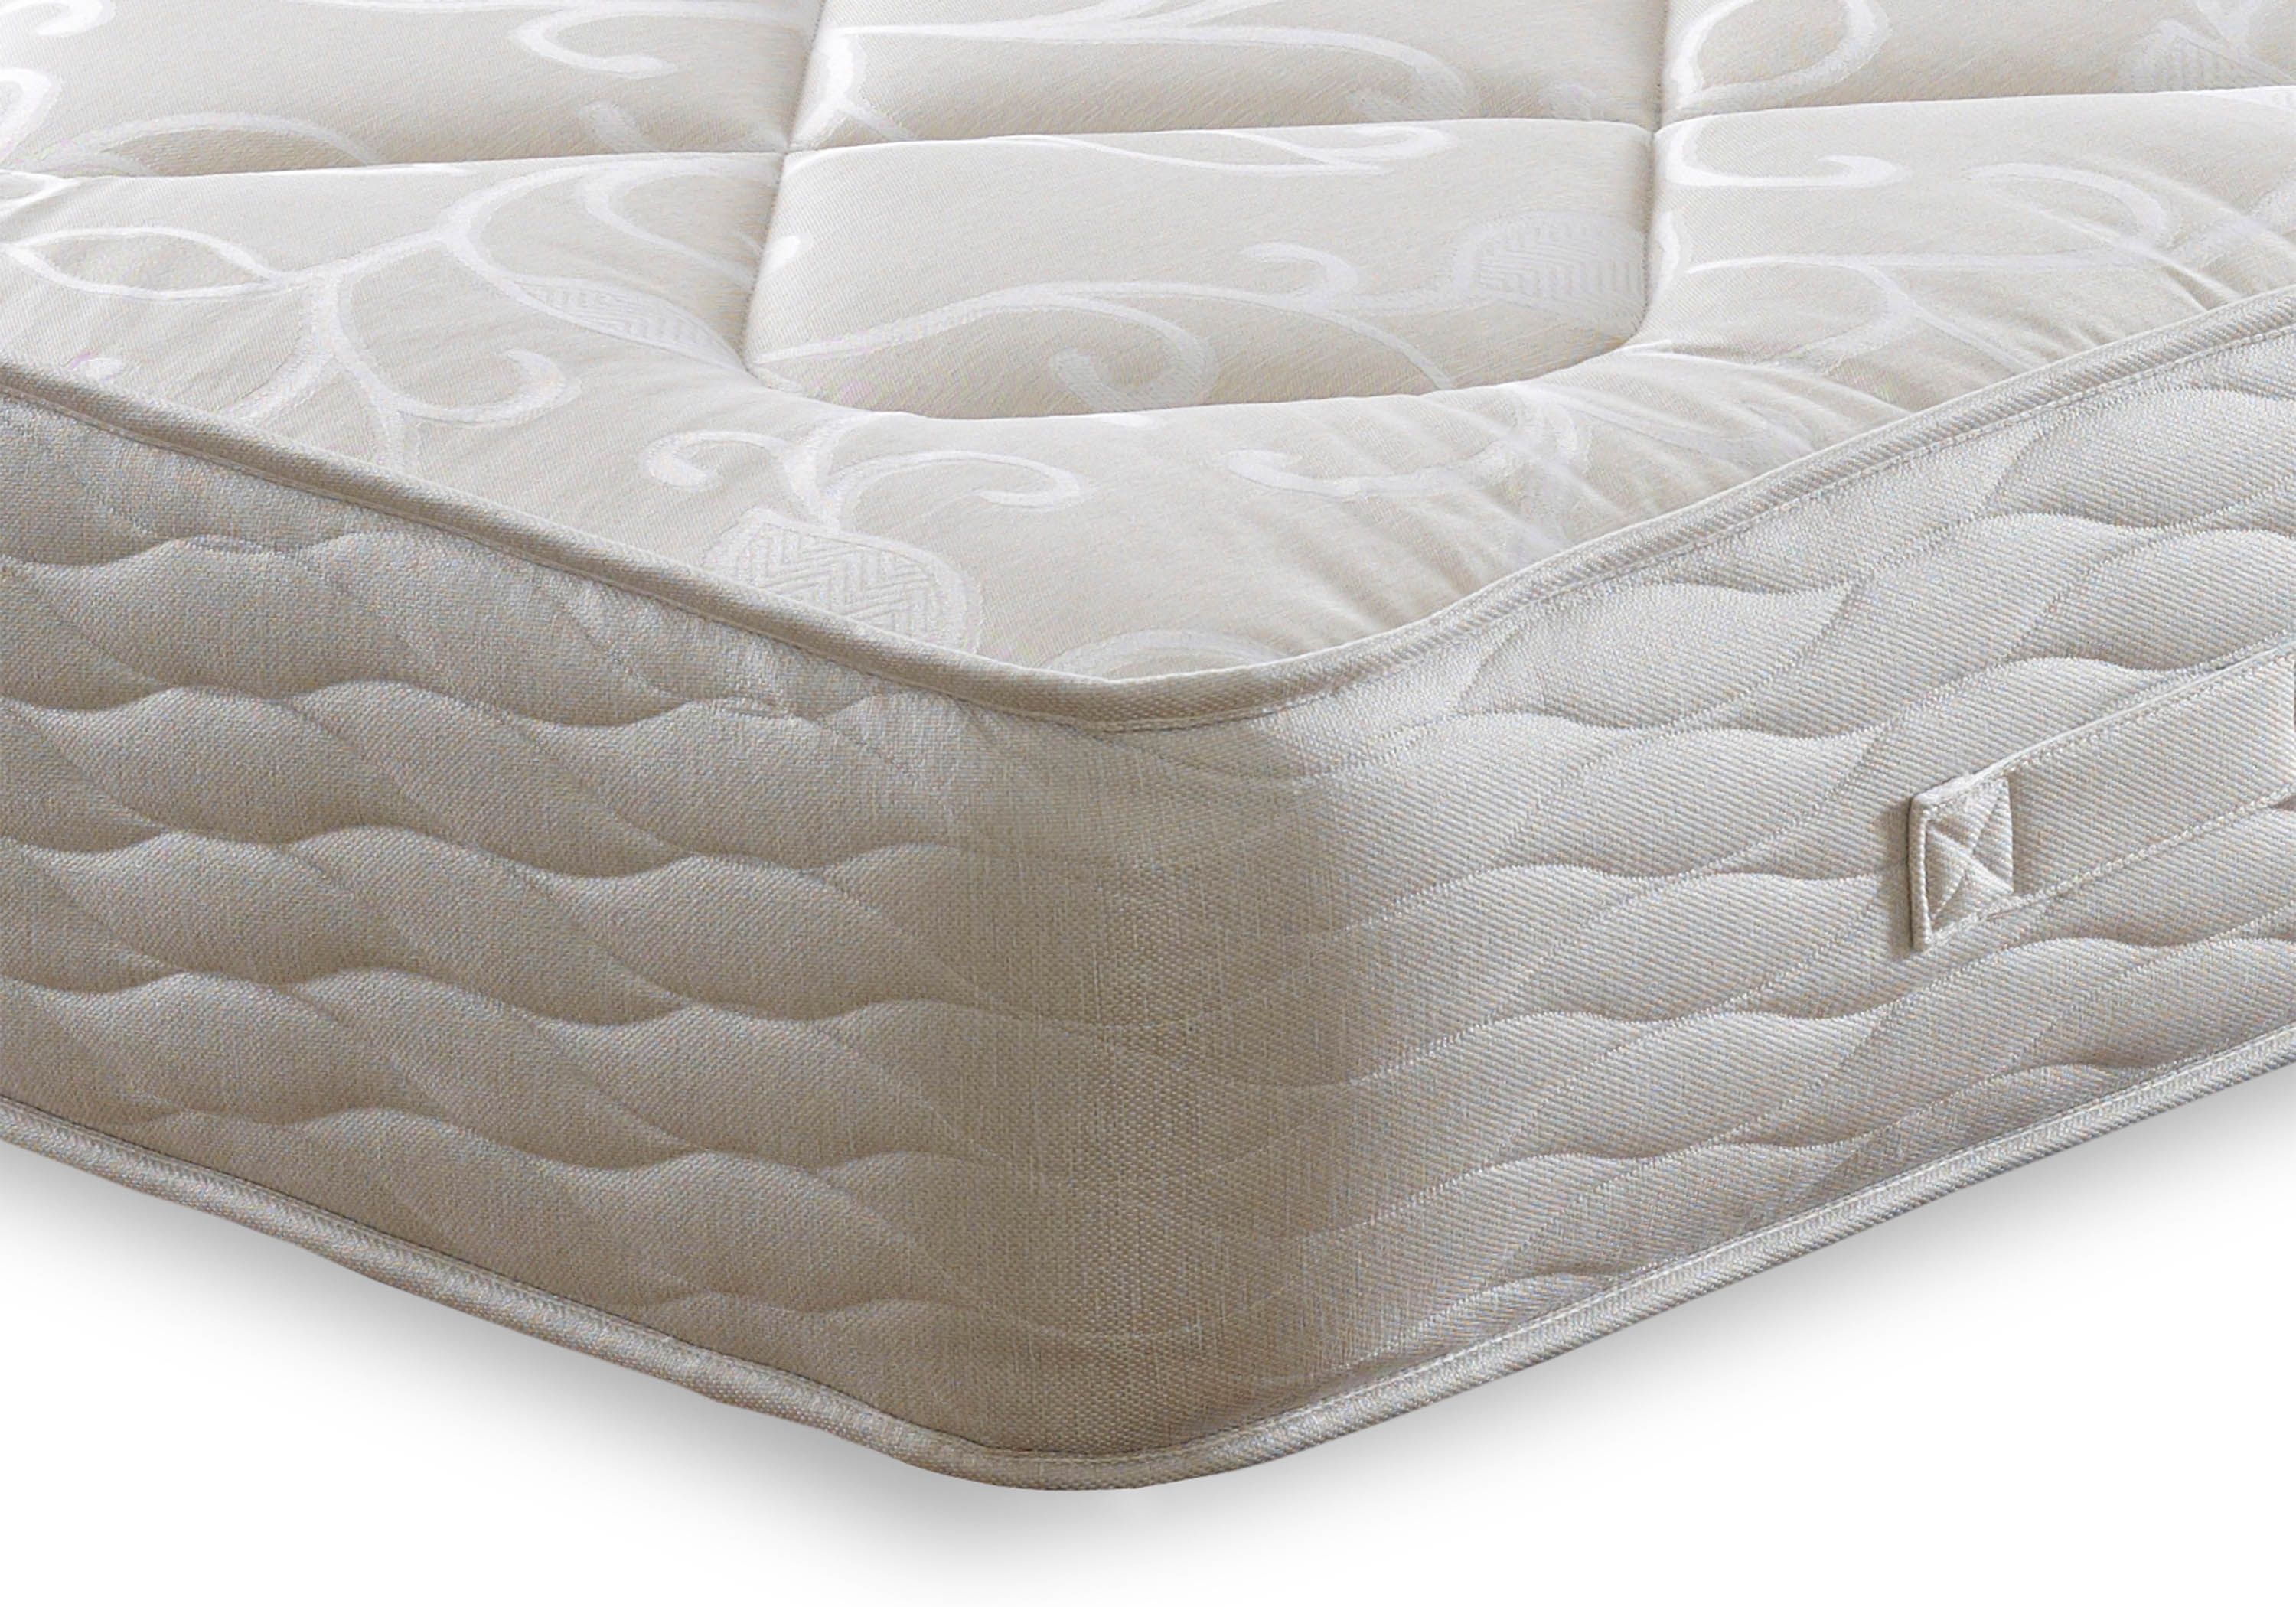 pegasus mattress for sale